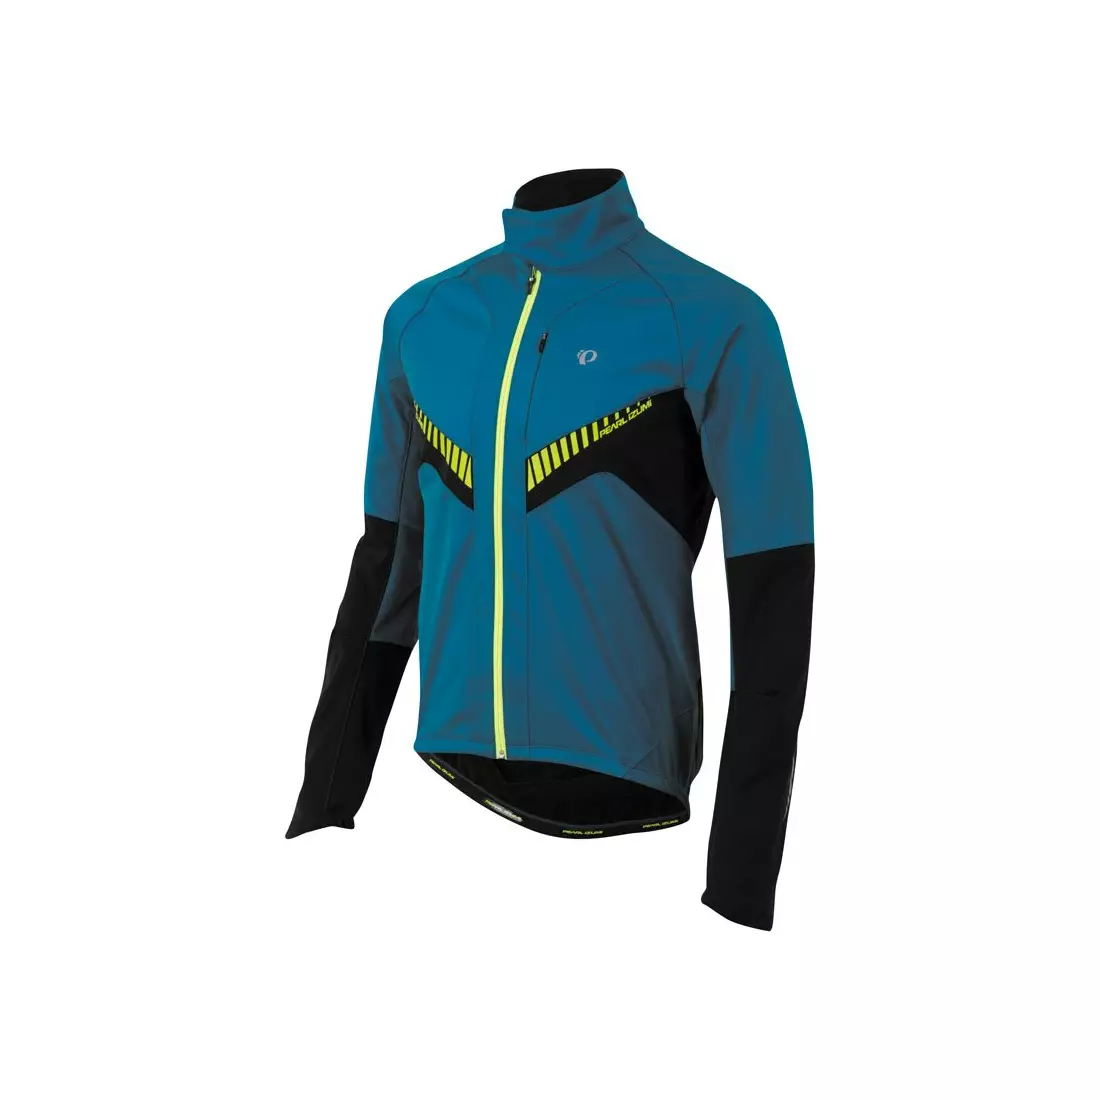 PEARL IZUMI - ELITE SOFTSHELL JACKET 11131407-4EM - men's cycling jacket, color: Blue-black